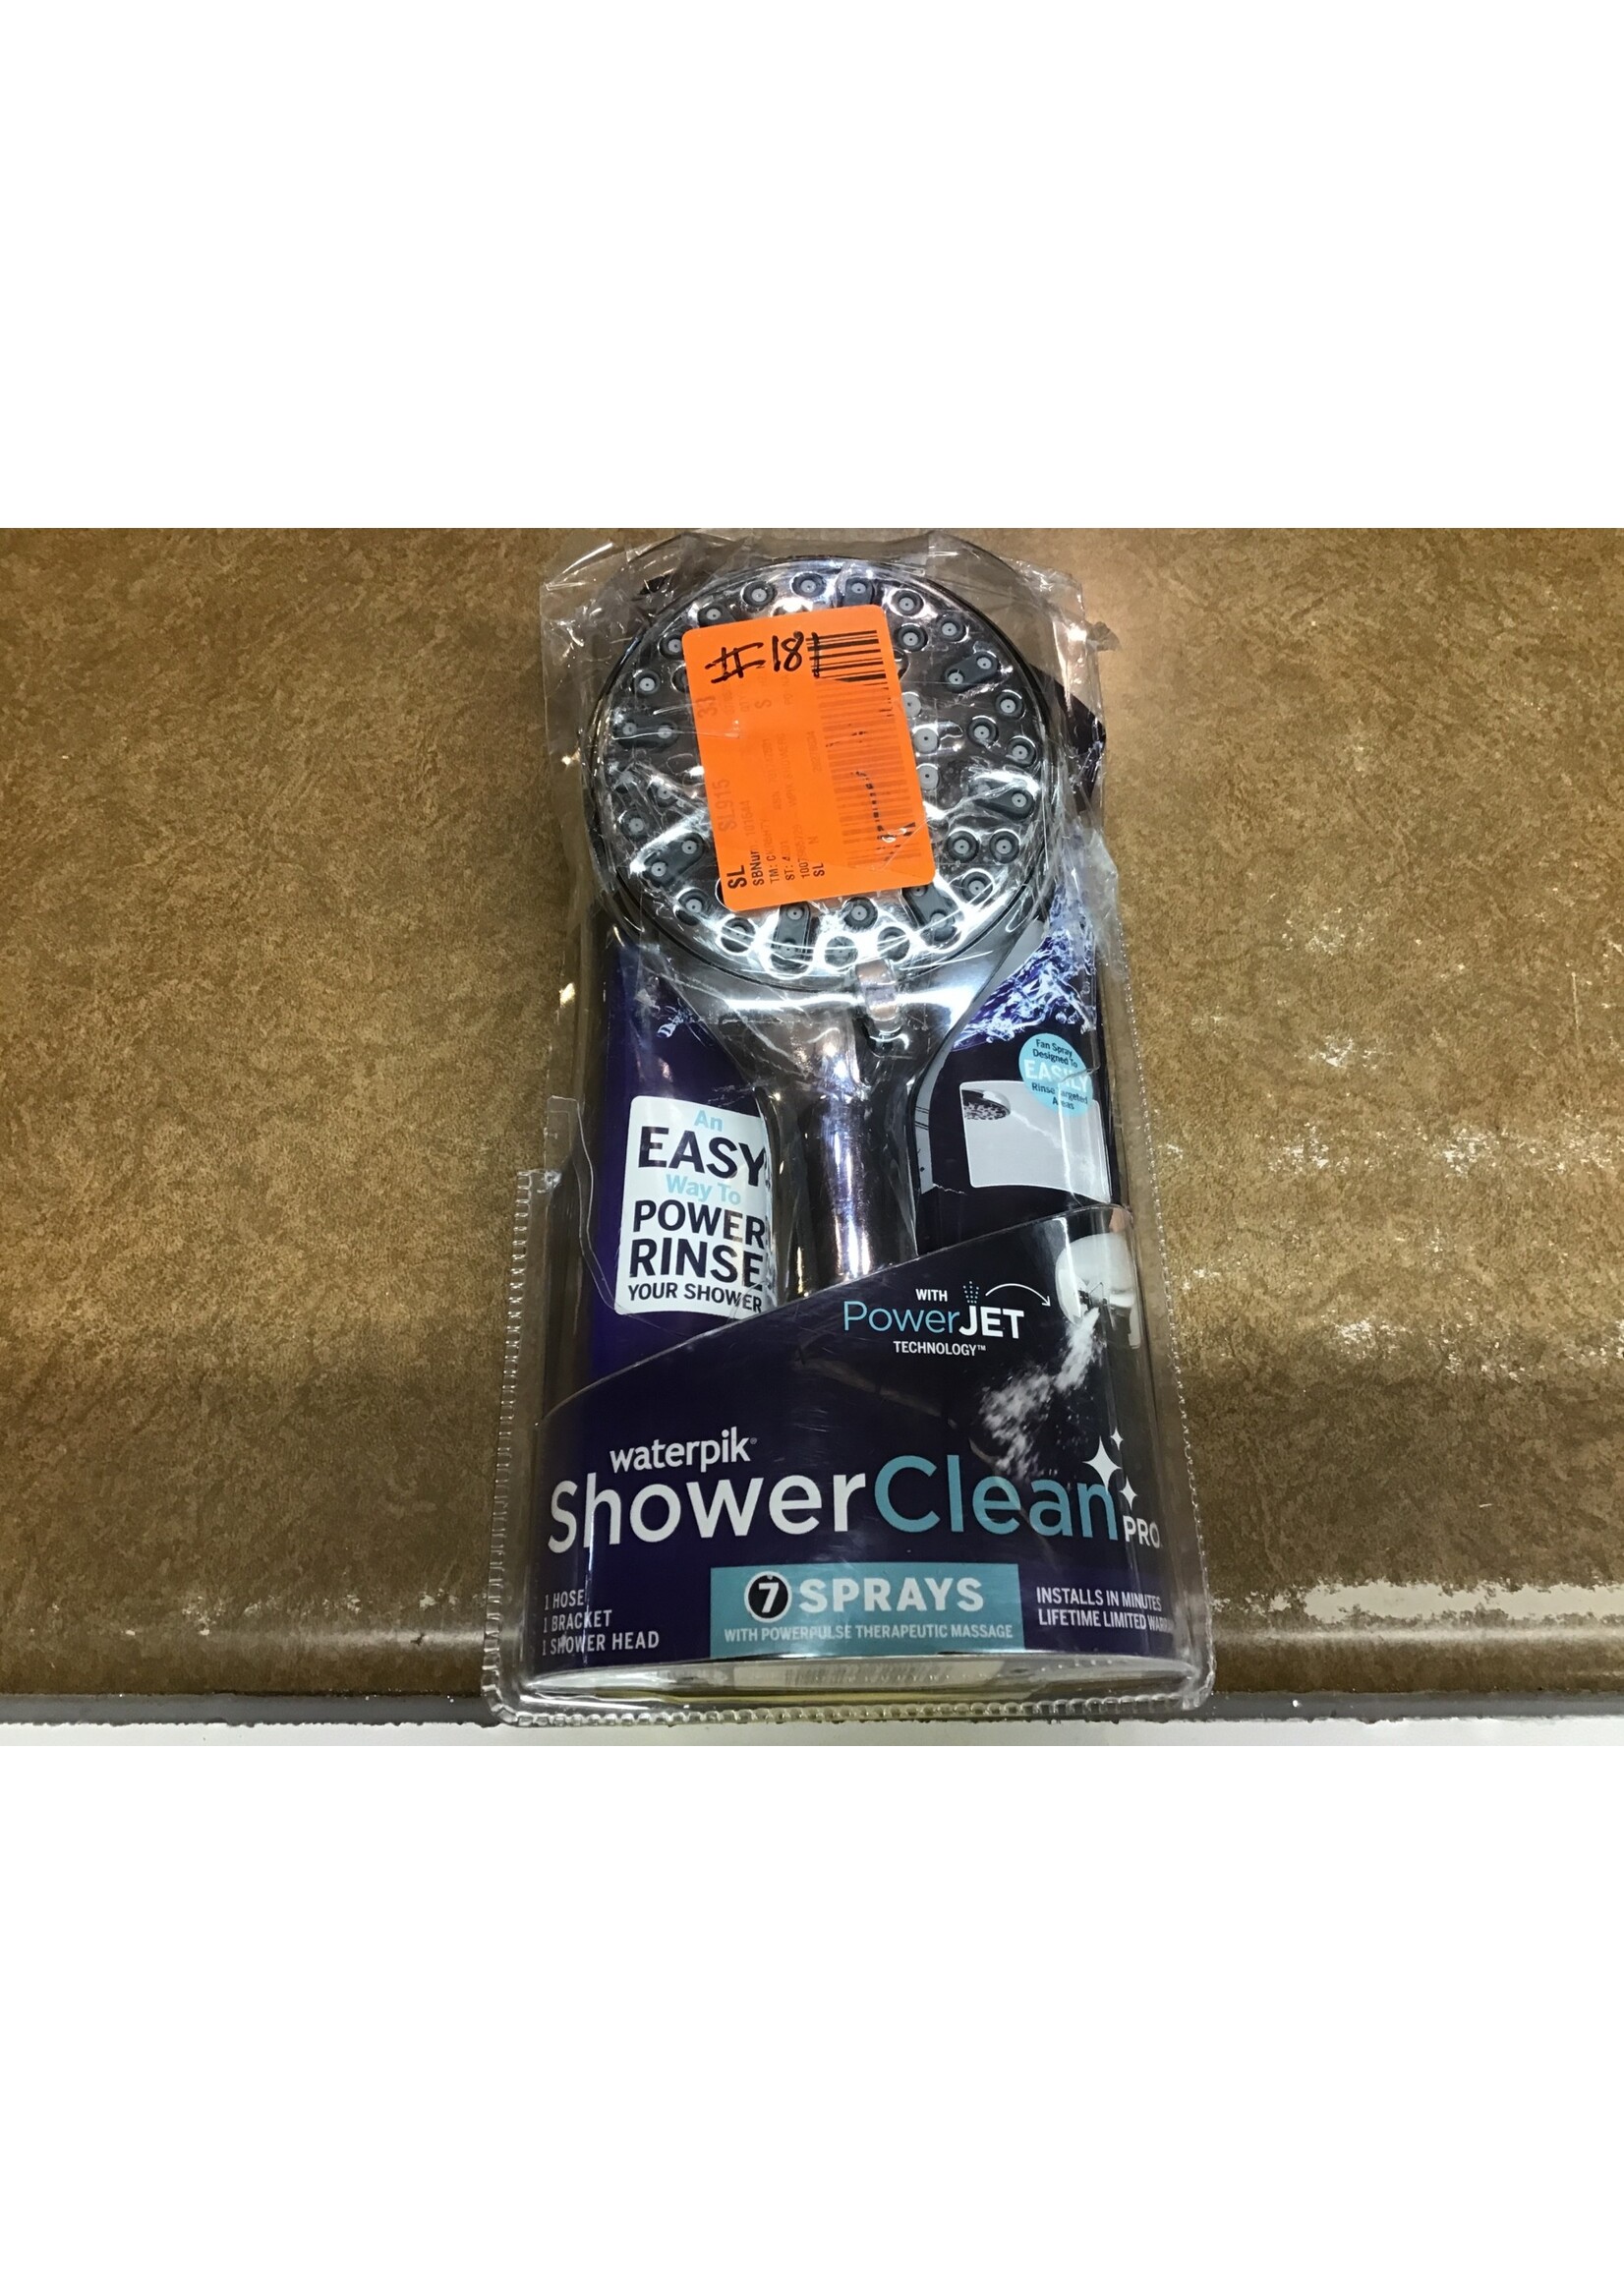 Box Damage, Water pink Shower Clean Pro handheld